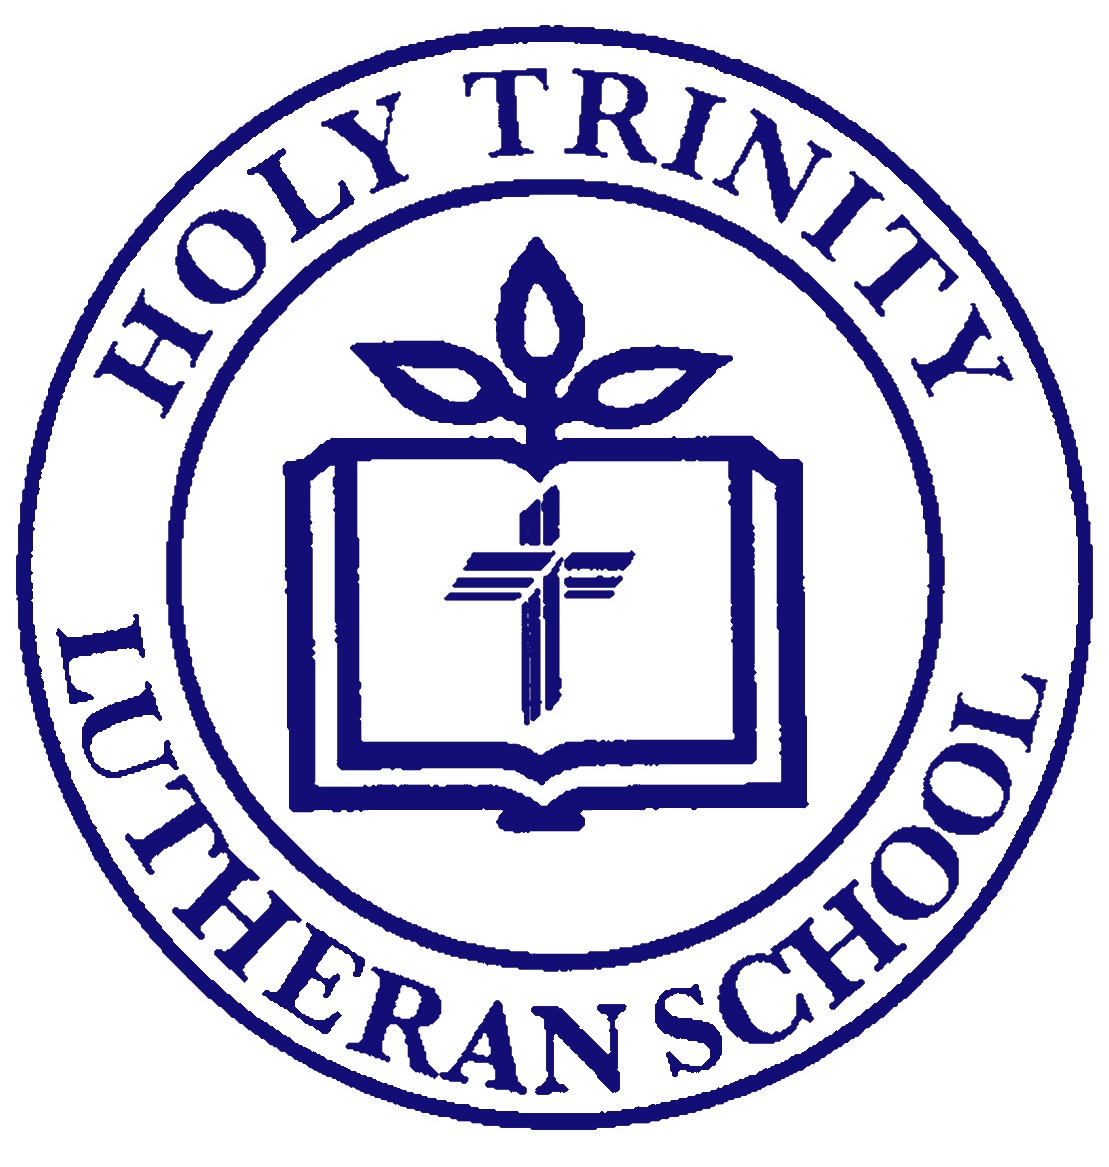 Holy Trinity Lutheran School